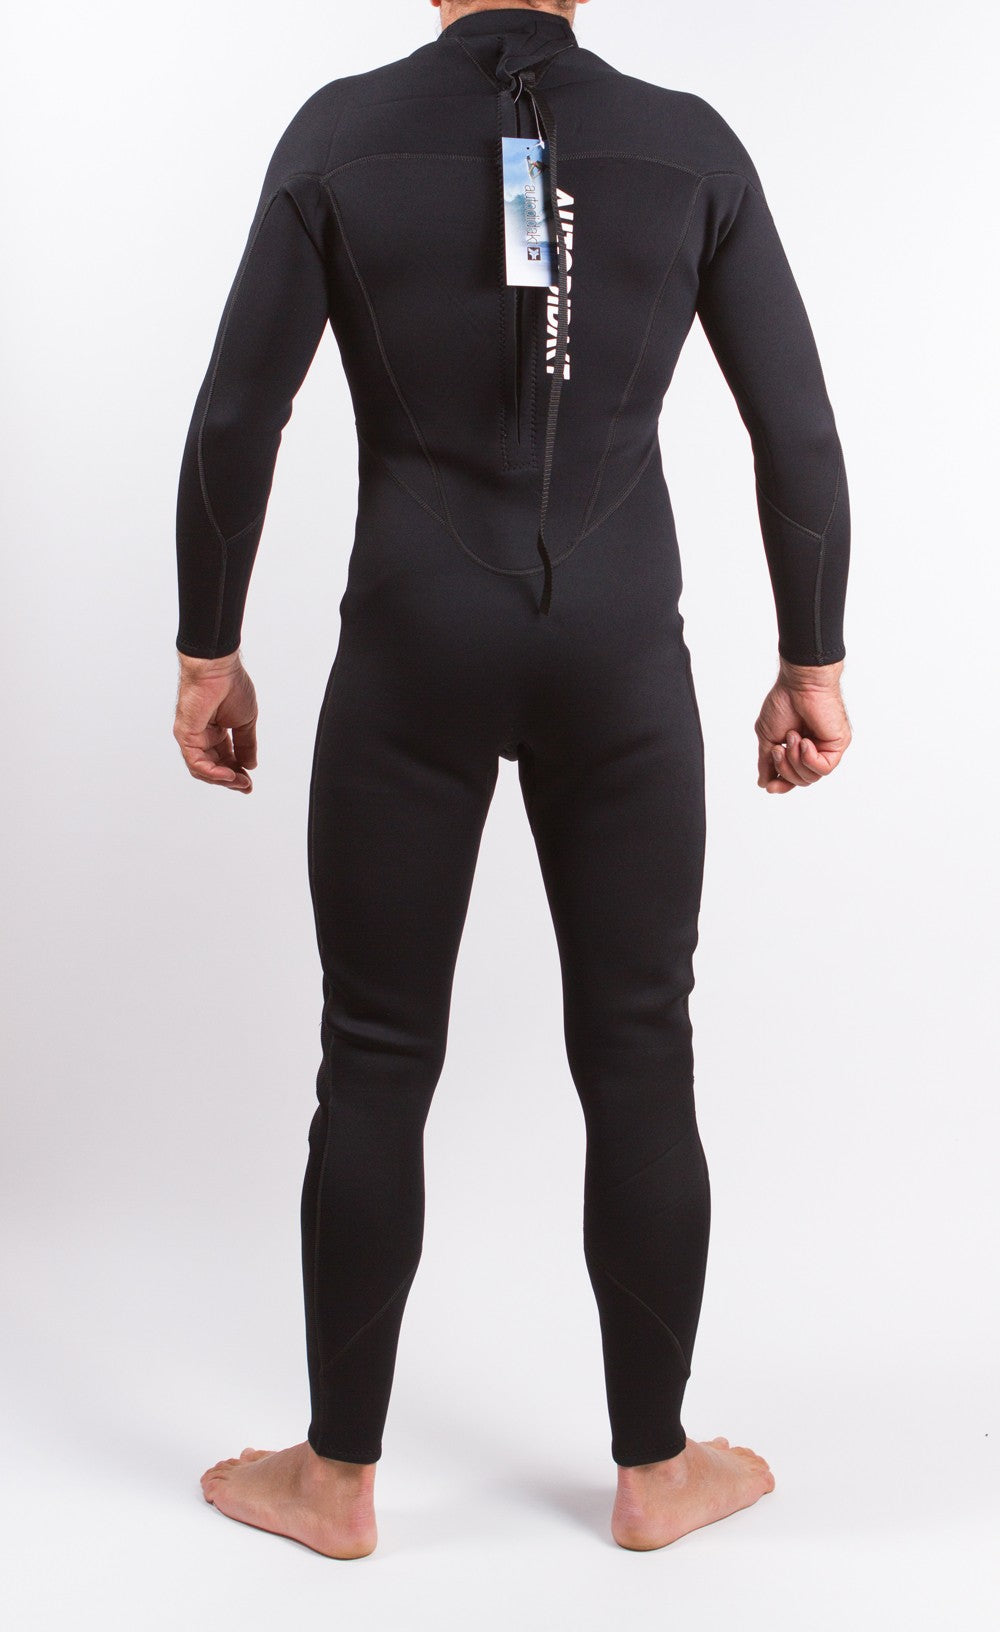 AUTODIDAKT - Junior 3/2mm back zip full surf wetsuit - Black